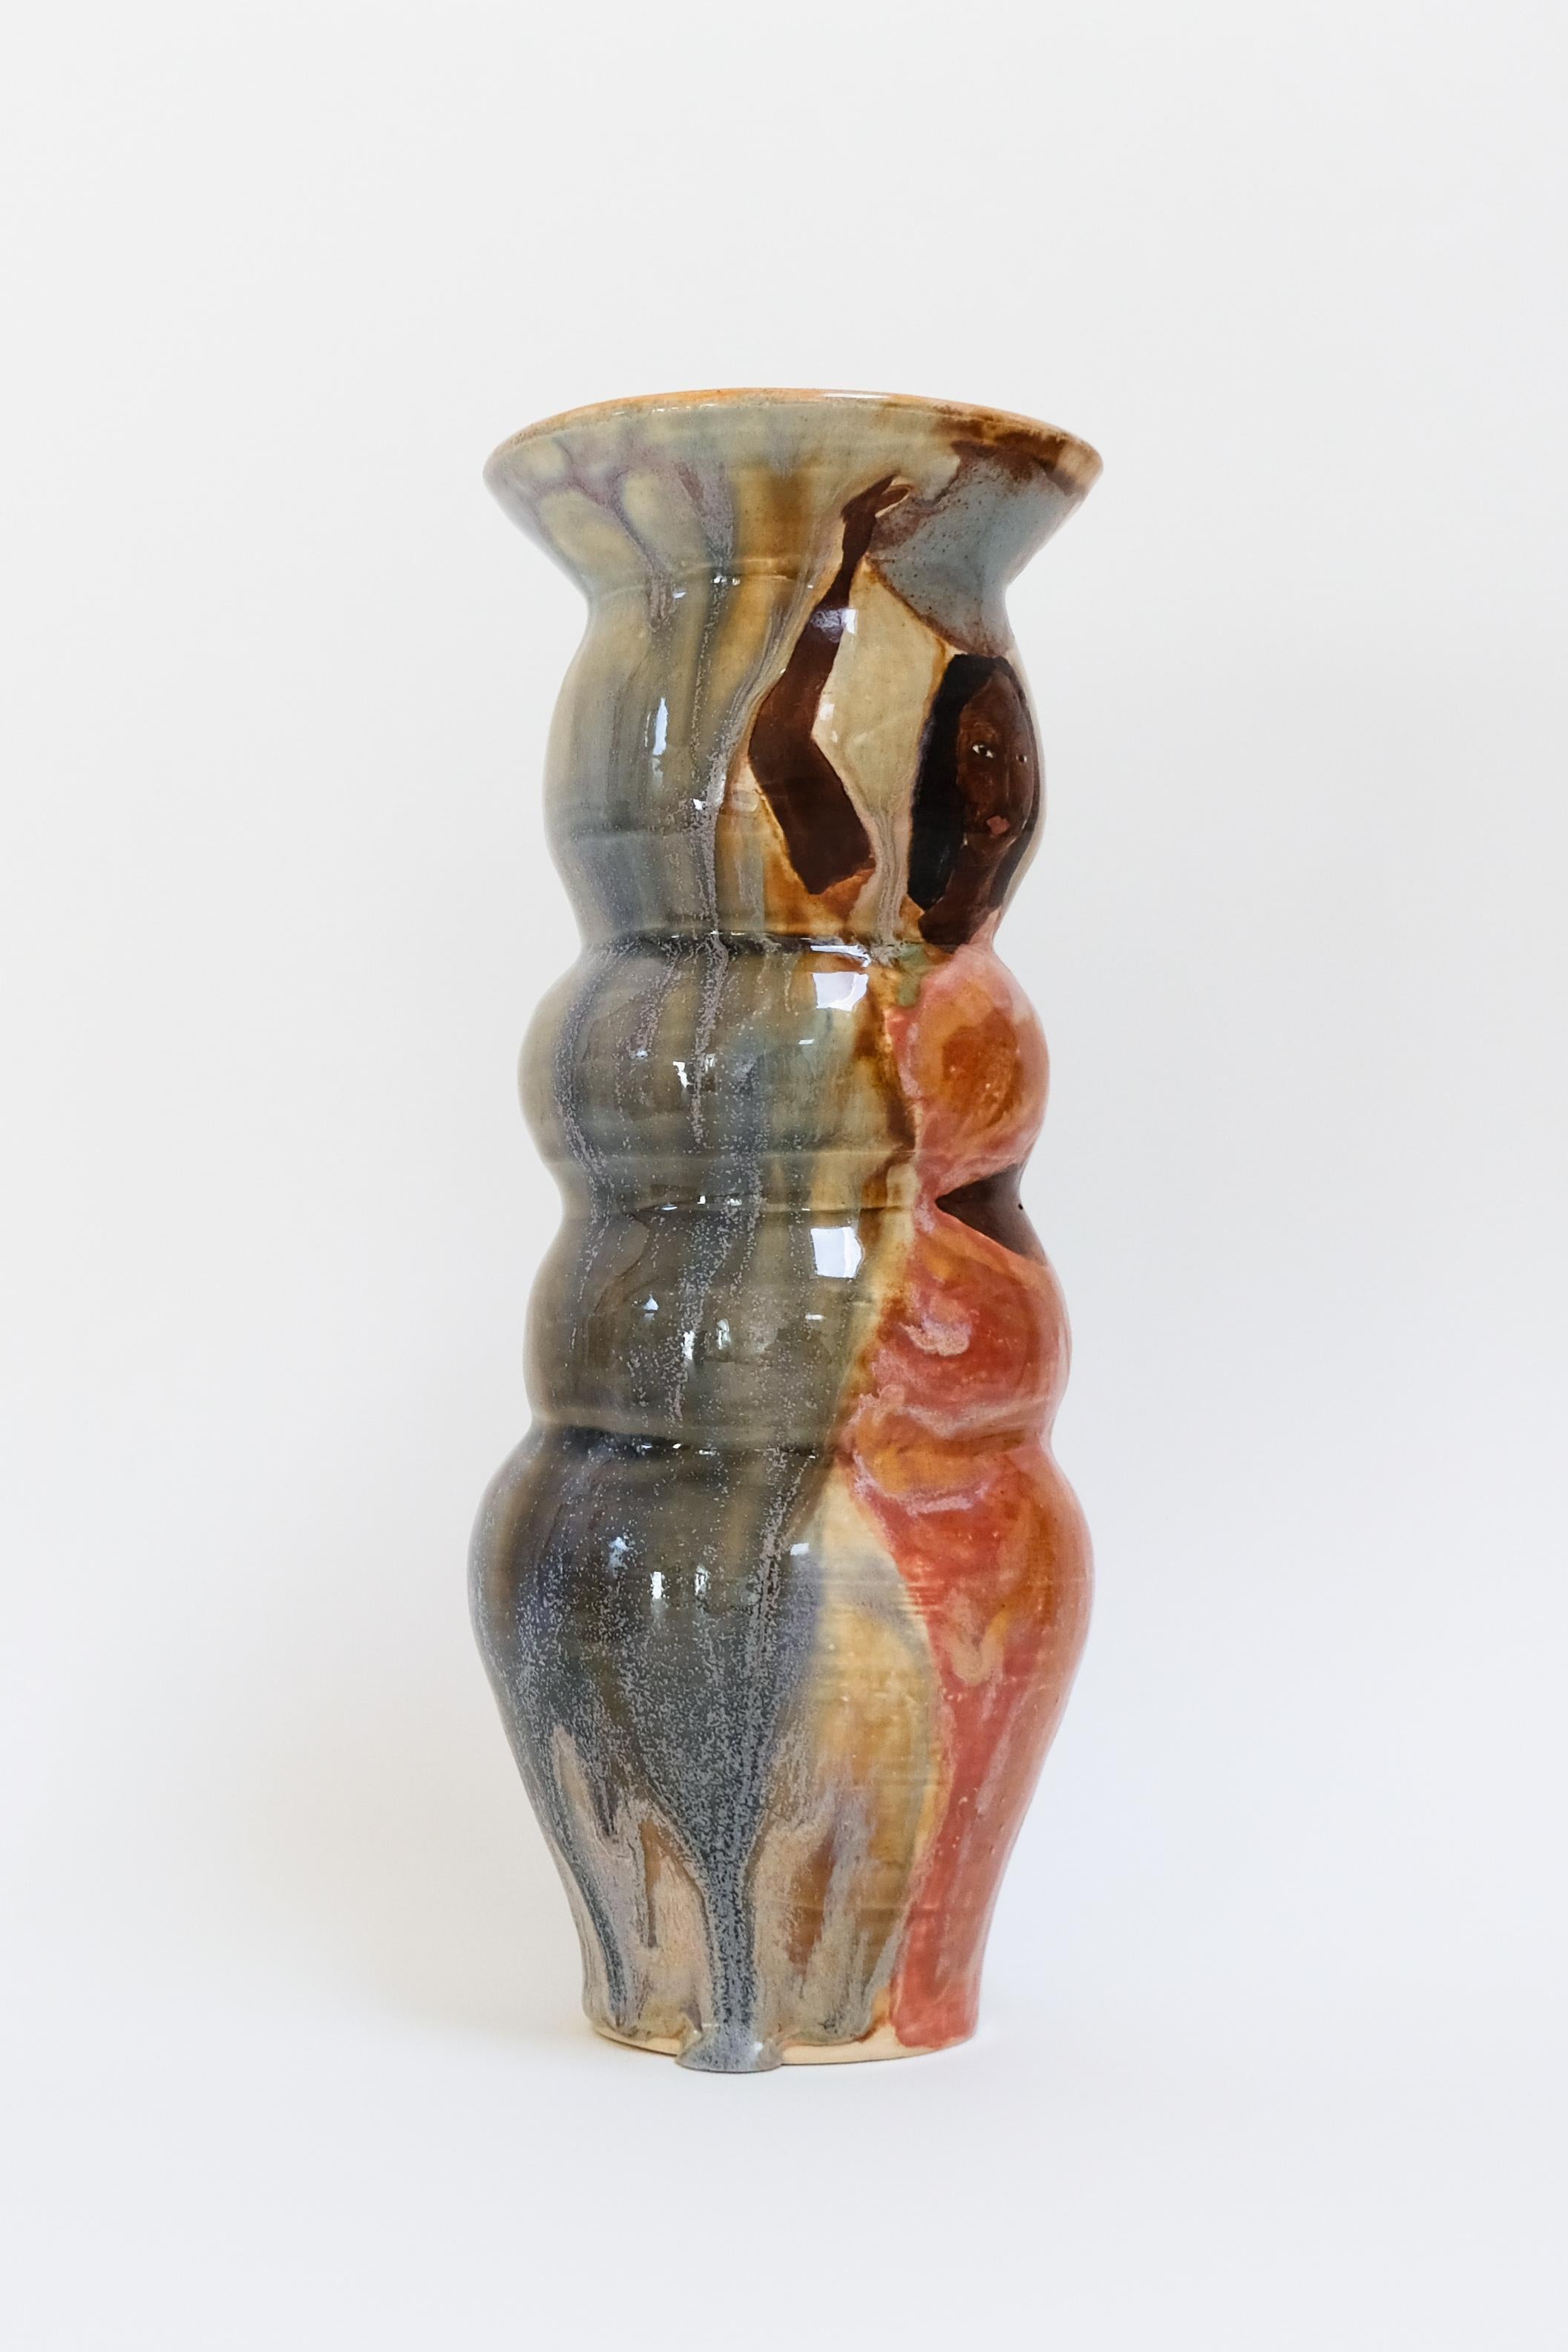 antique vase meaning in urdu